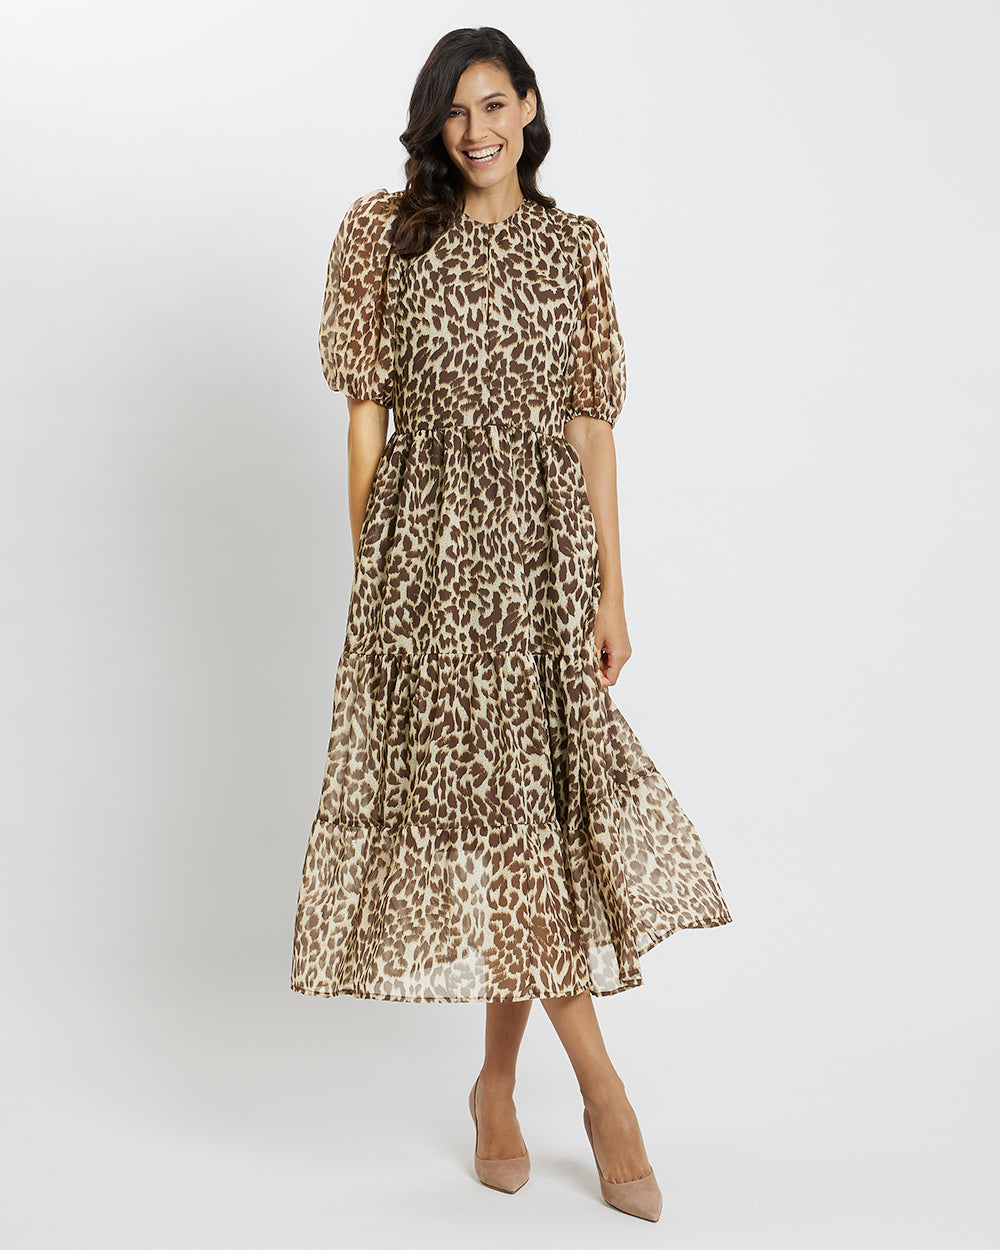 Jordana Chiffon Dress in Speckled Cheetah| Jude Connally